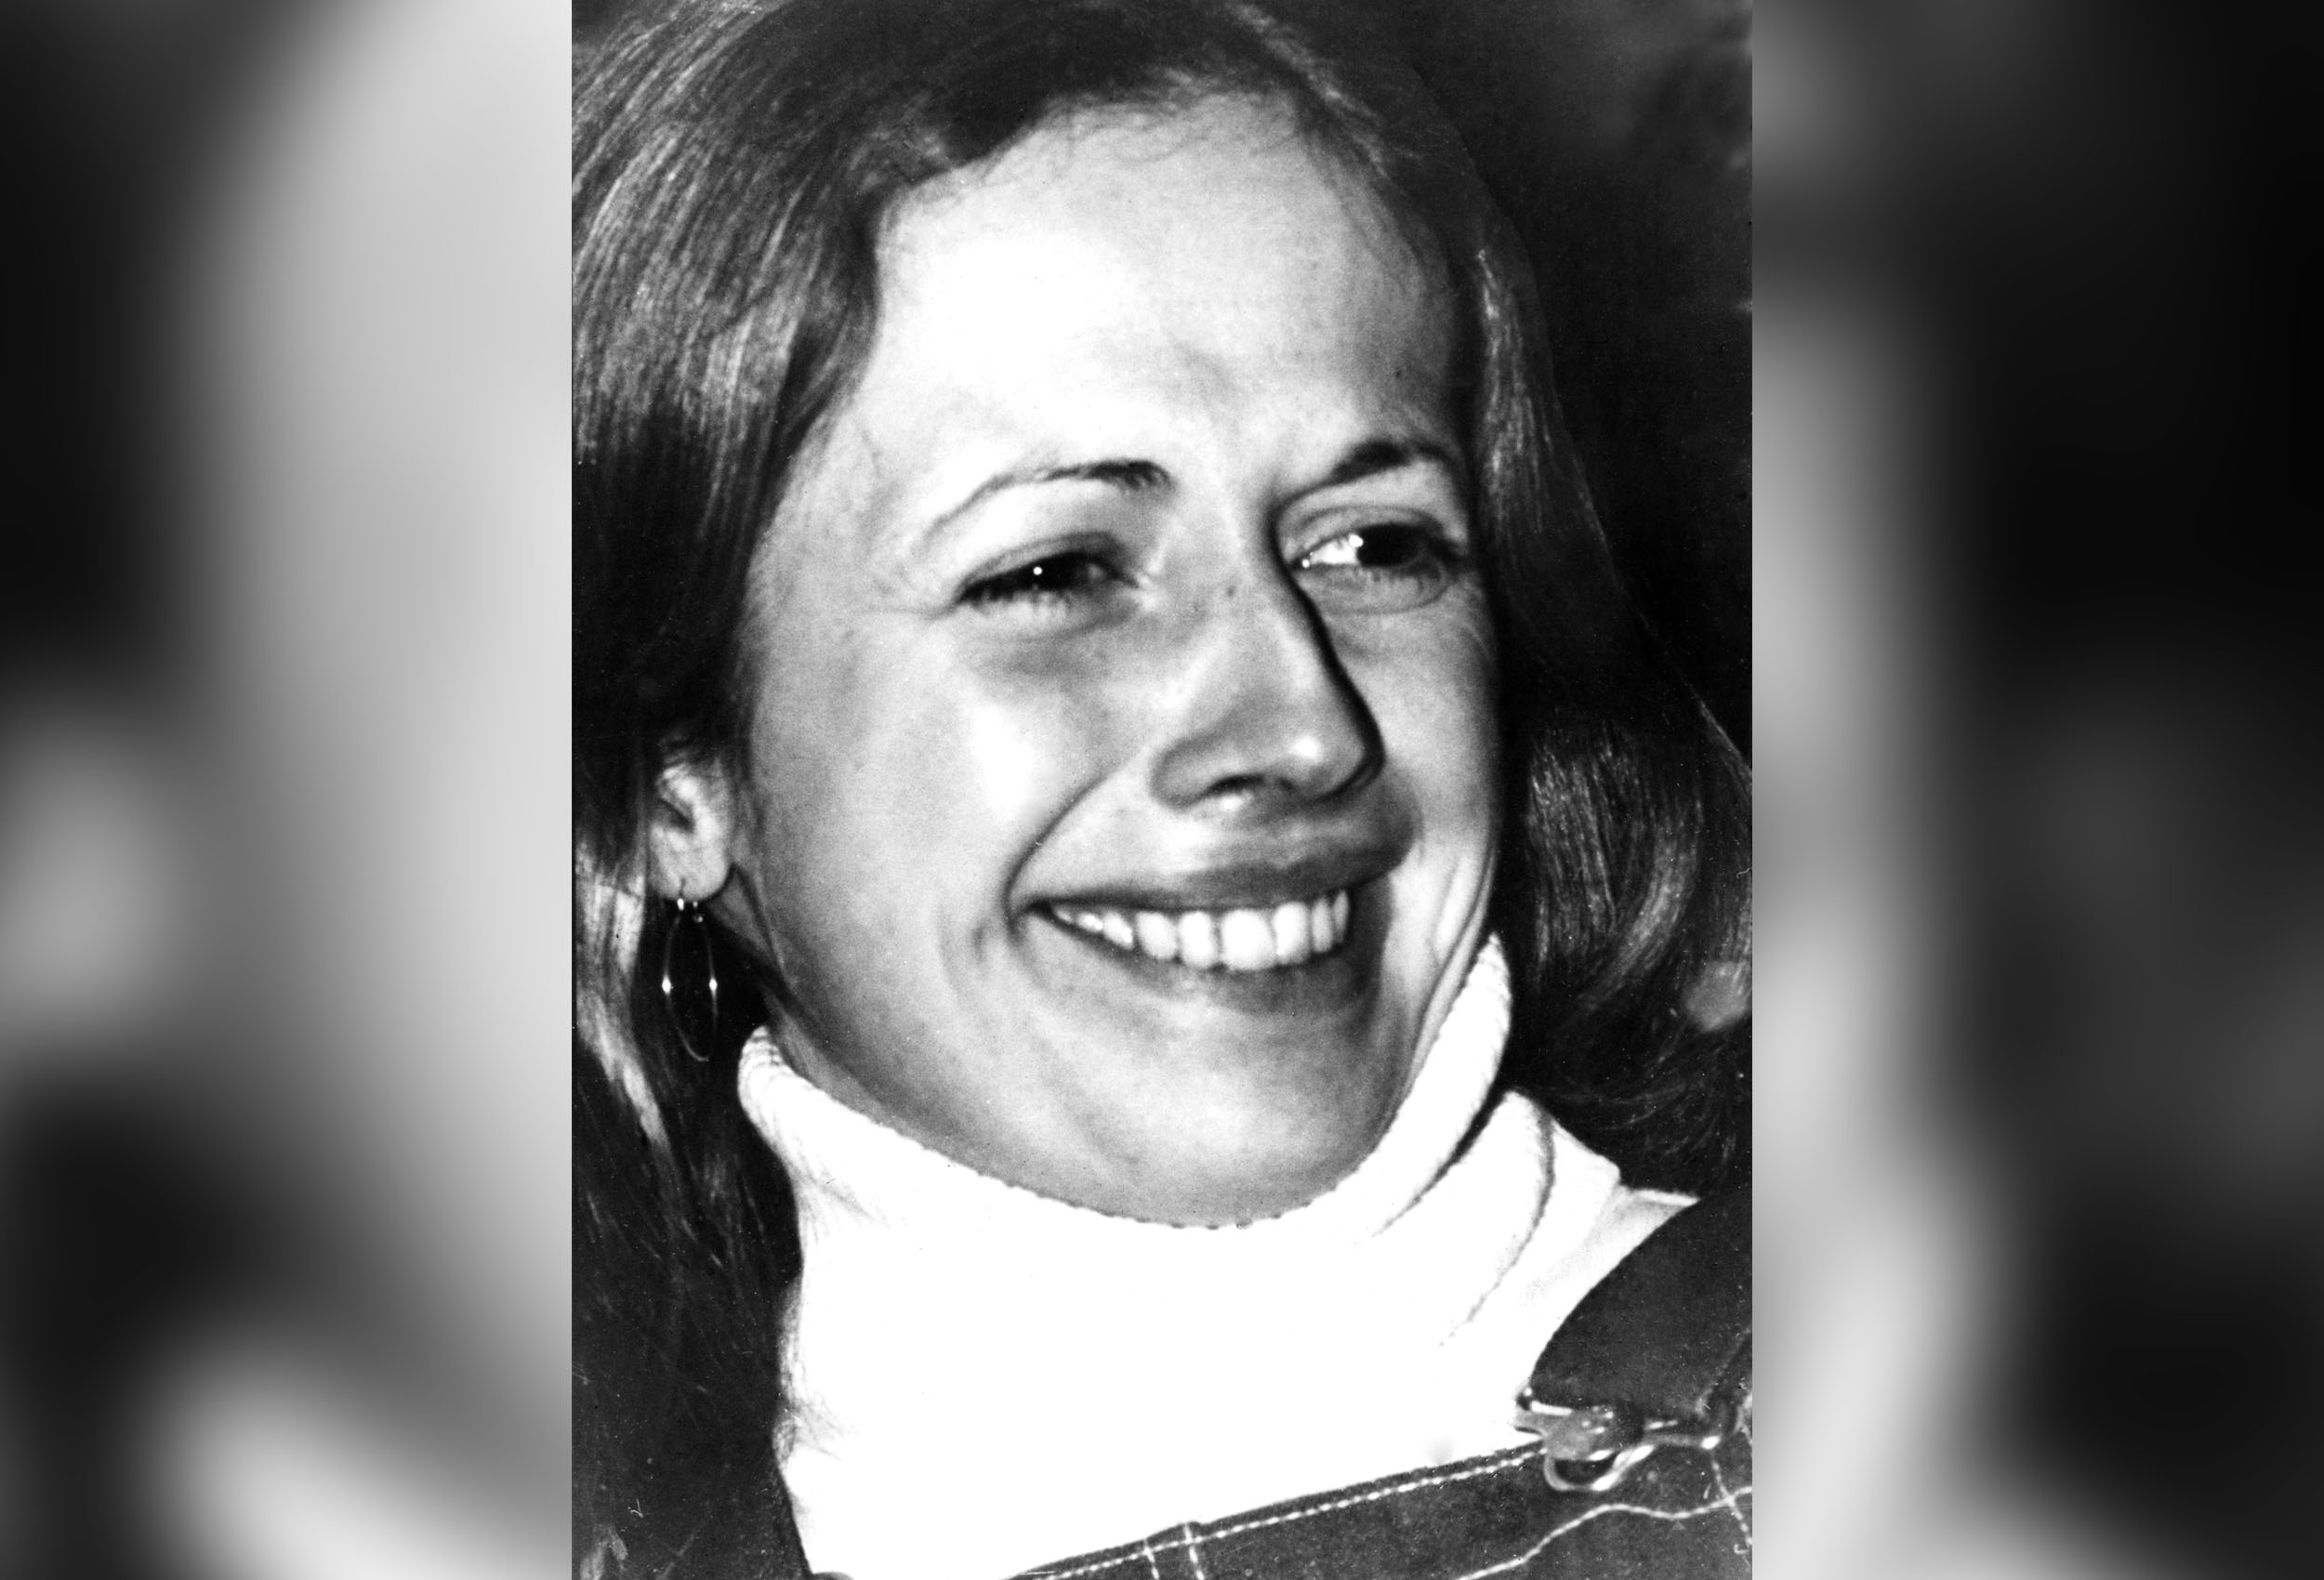 PHOTO: An undated handout photo depicts Kathleen Durst, last seen on Jan. 21, 1982.